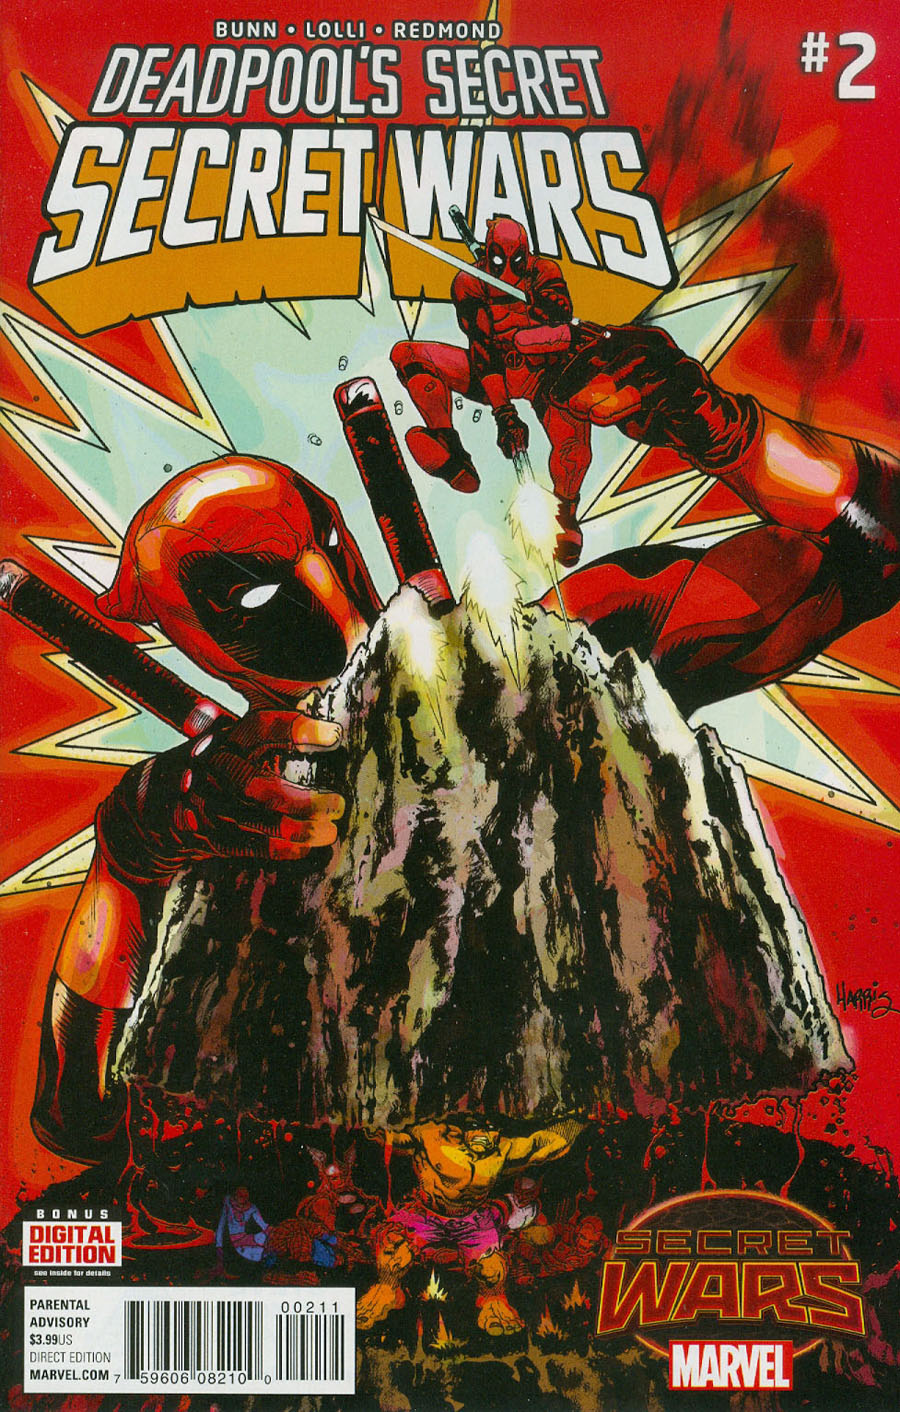 Deadpools Secret Secret Wars #2 Cover A Regular Tony Harris Cover (Secret Wars Warzones Tie-In)